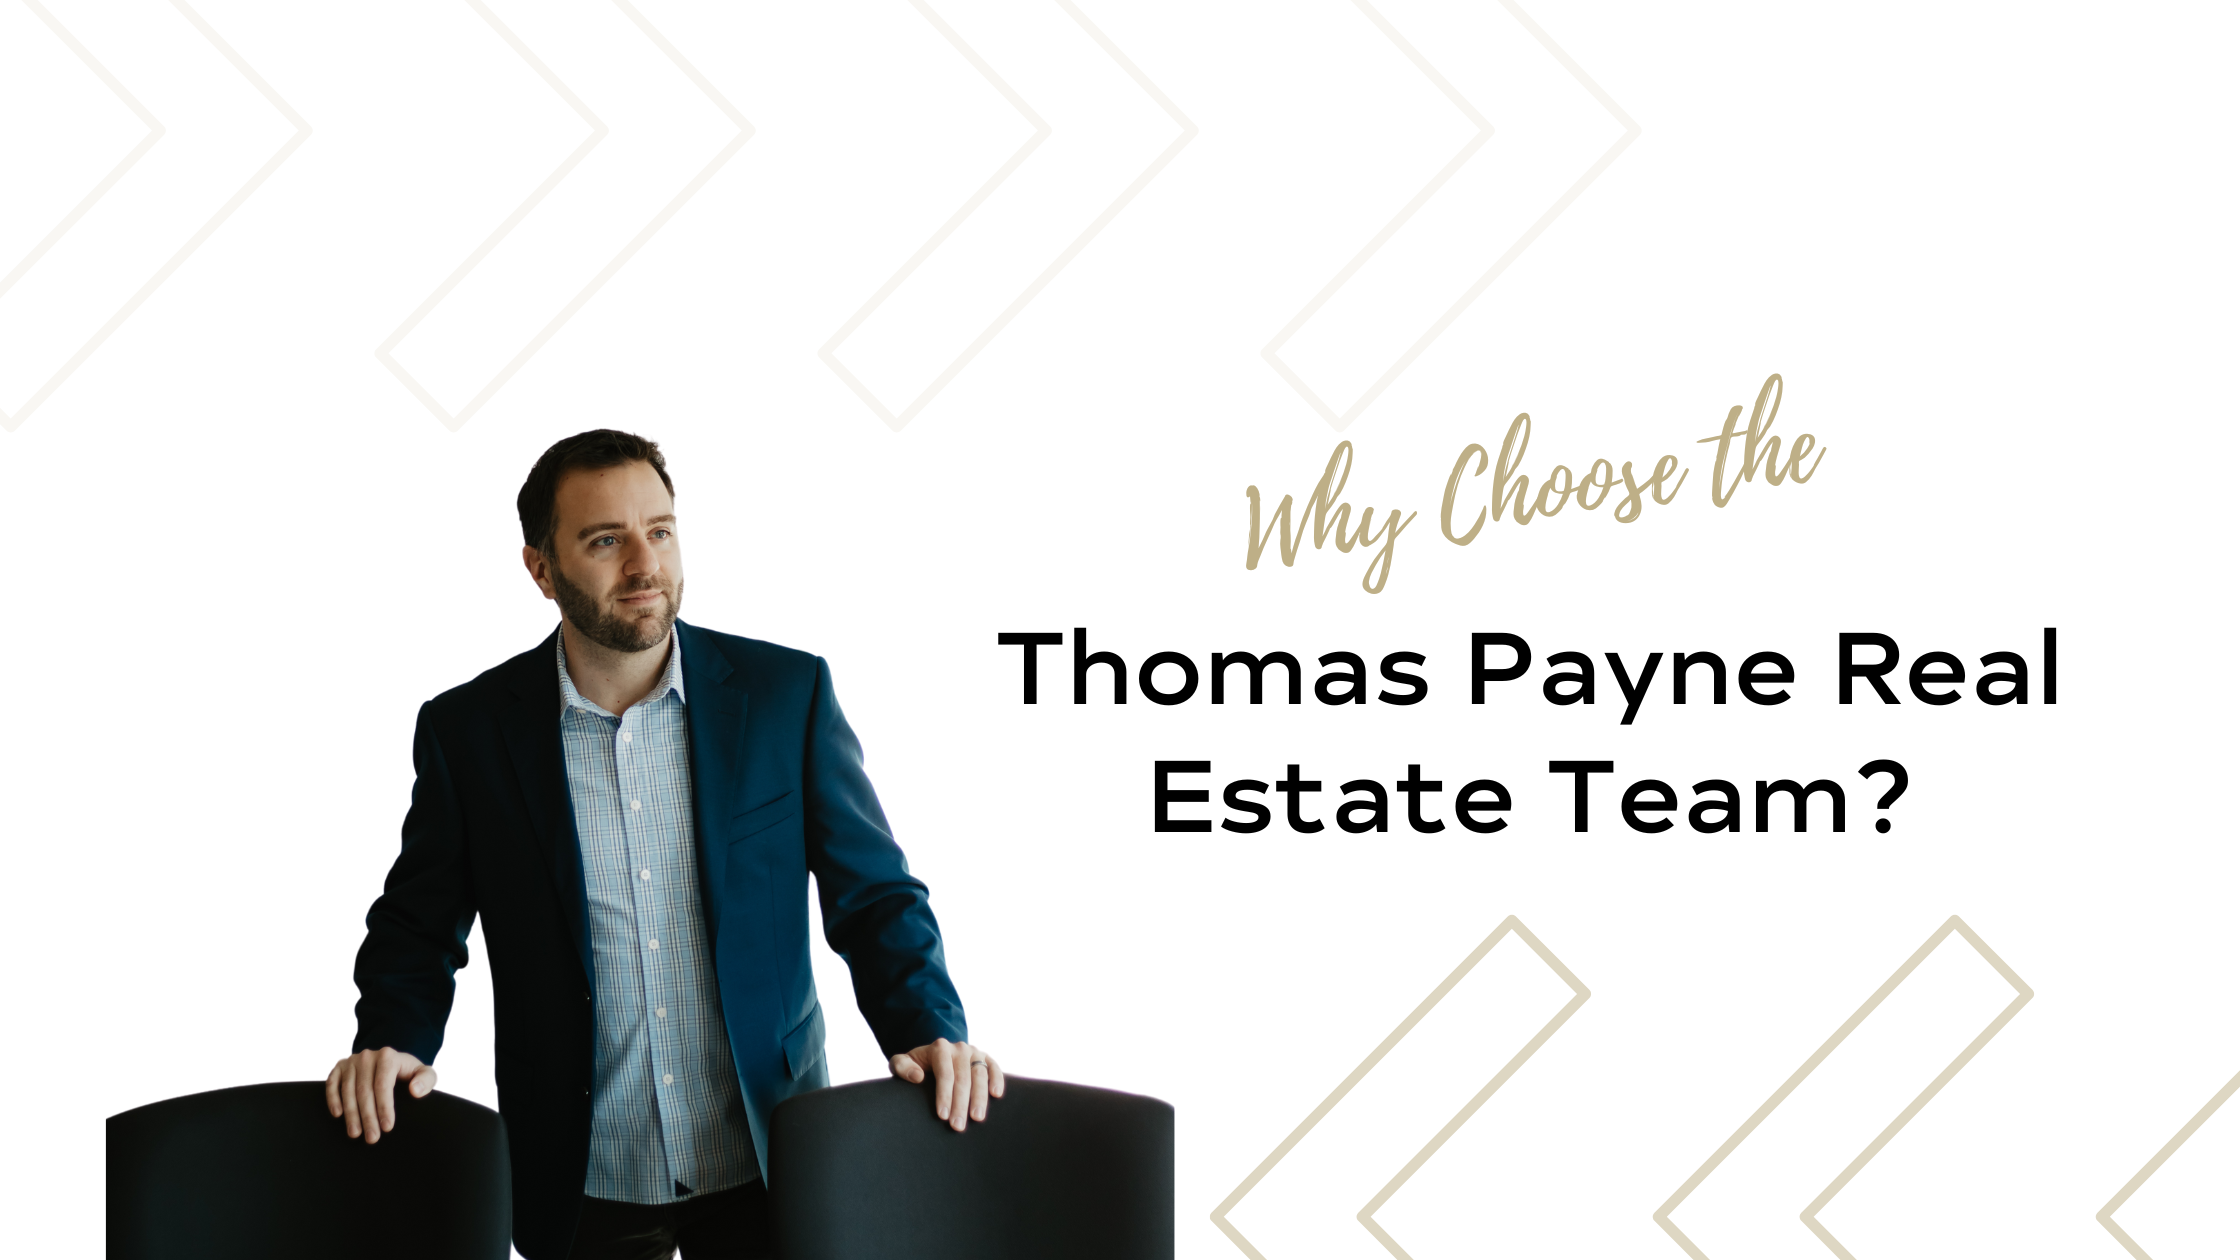 Why Choose The Thomas Payne Real Estate Team?